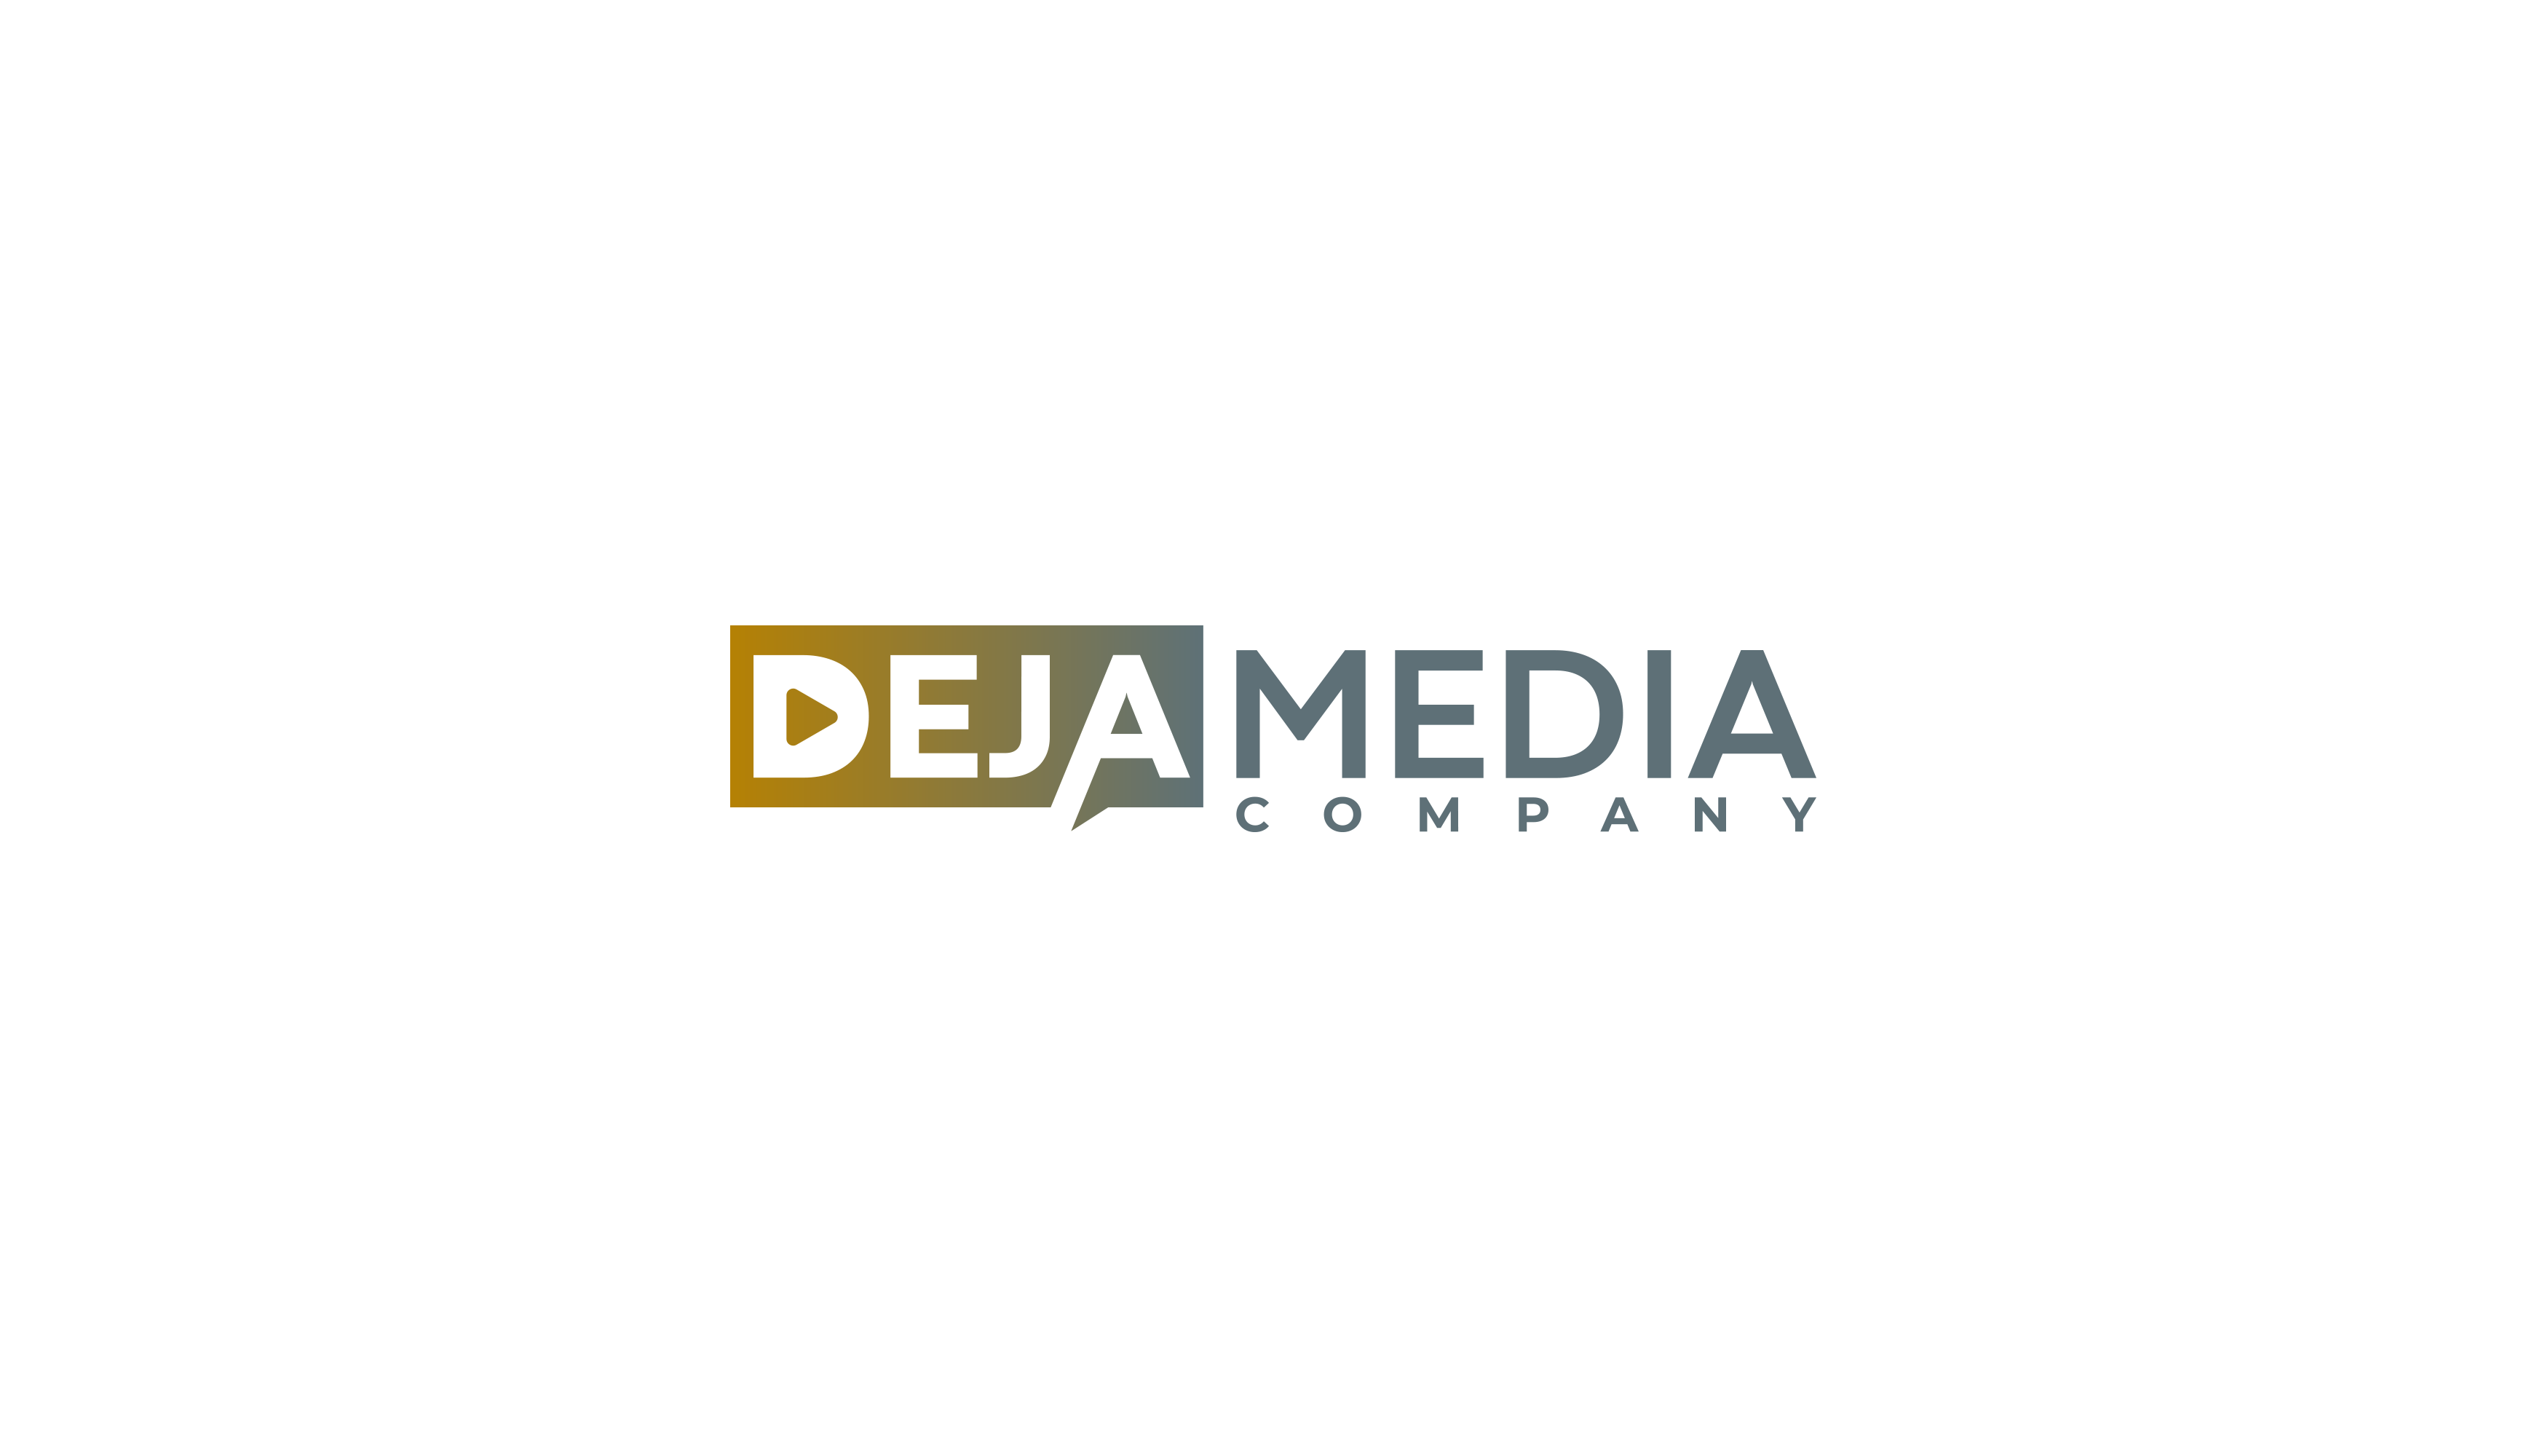 The Dejamedia Company Blog